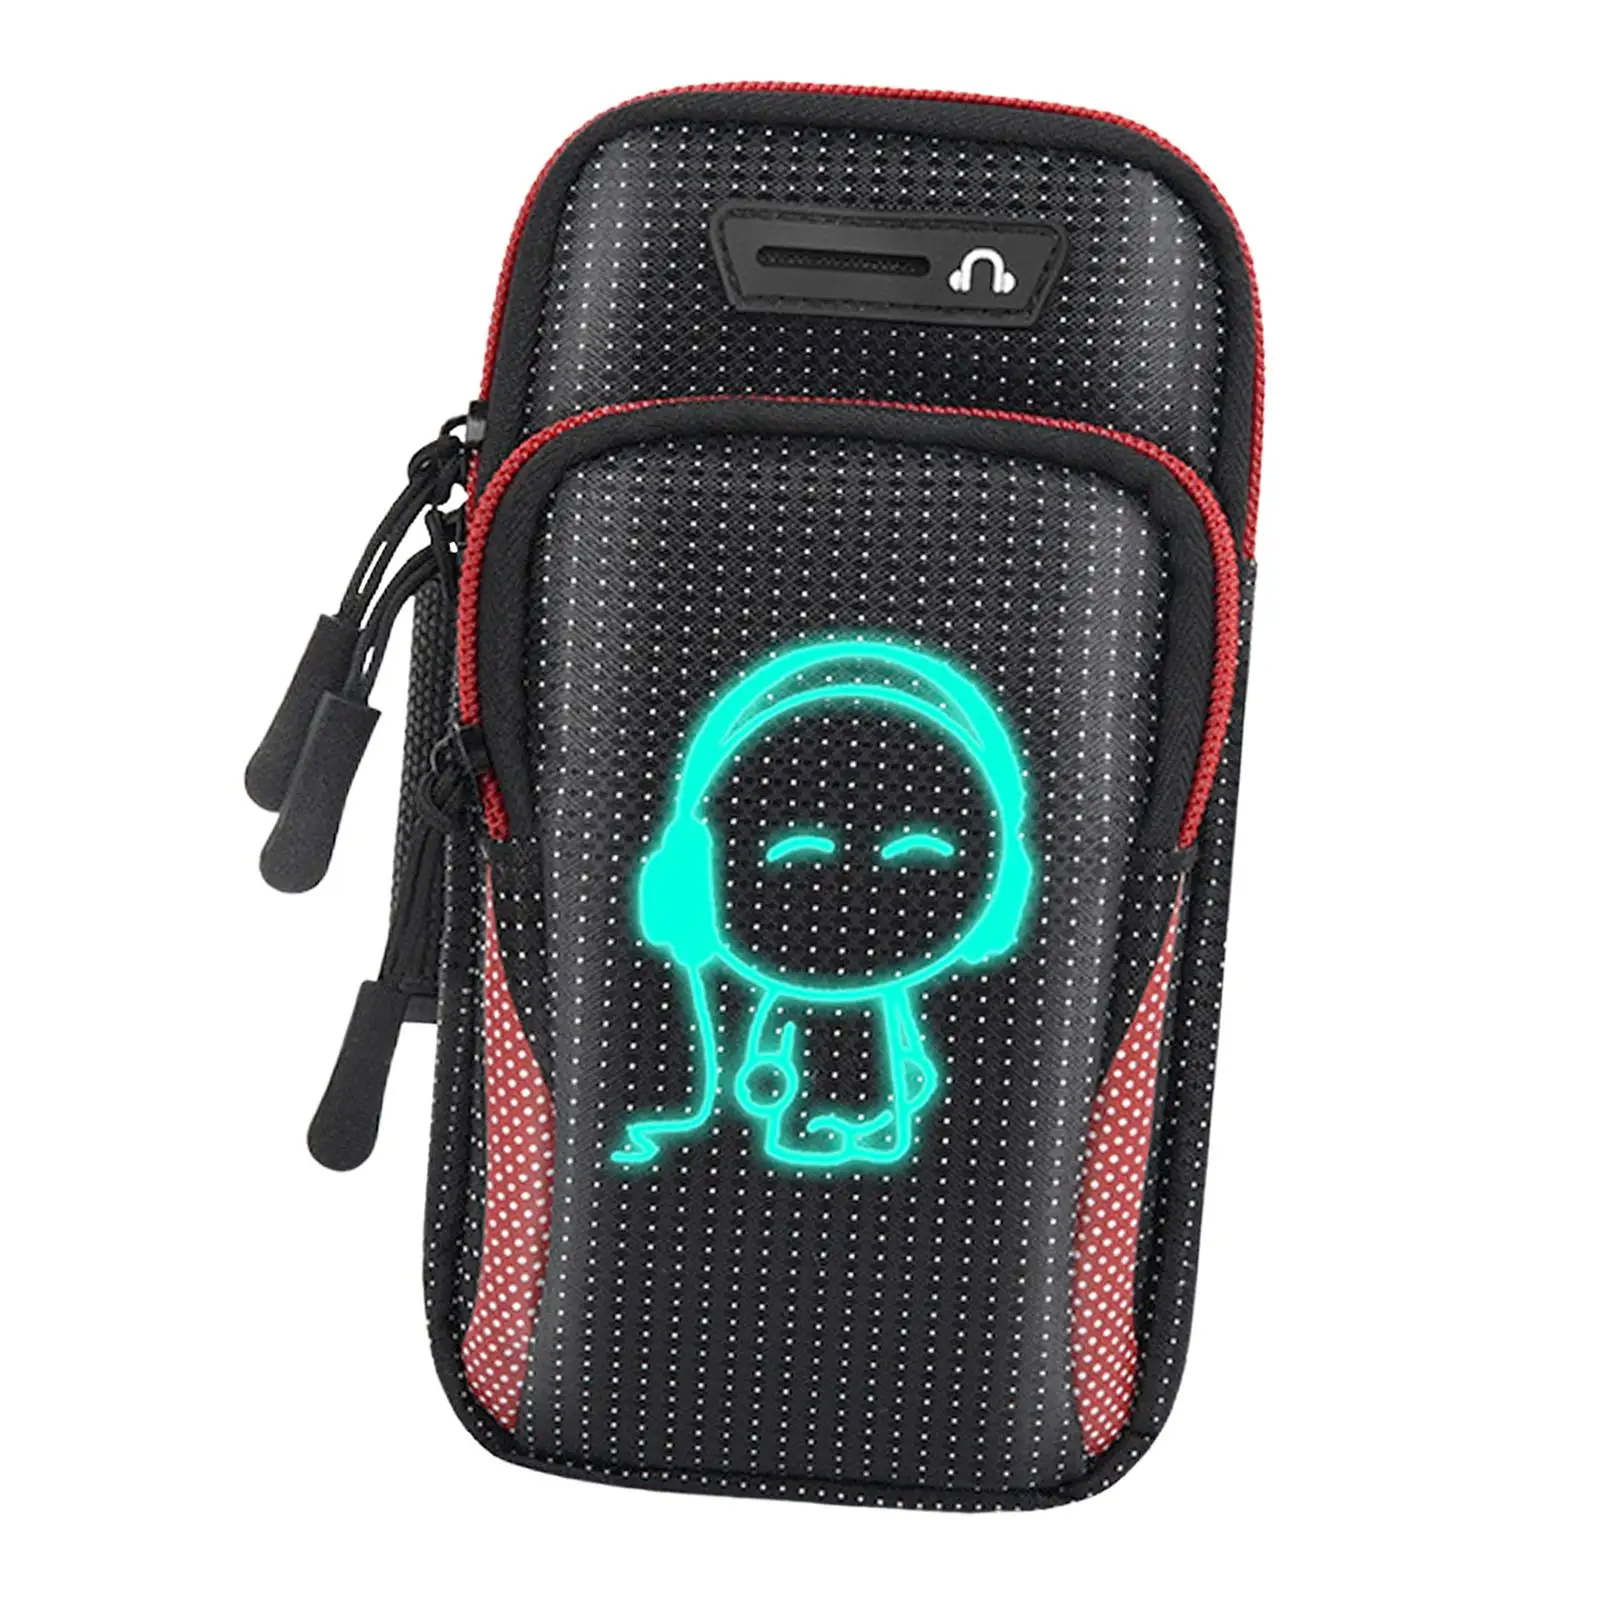 Waist Belt Sport Travell Bum Bag for Phone Case Cover Purse Key Card Pouch